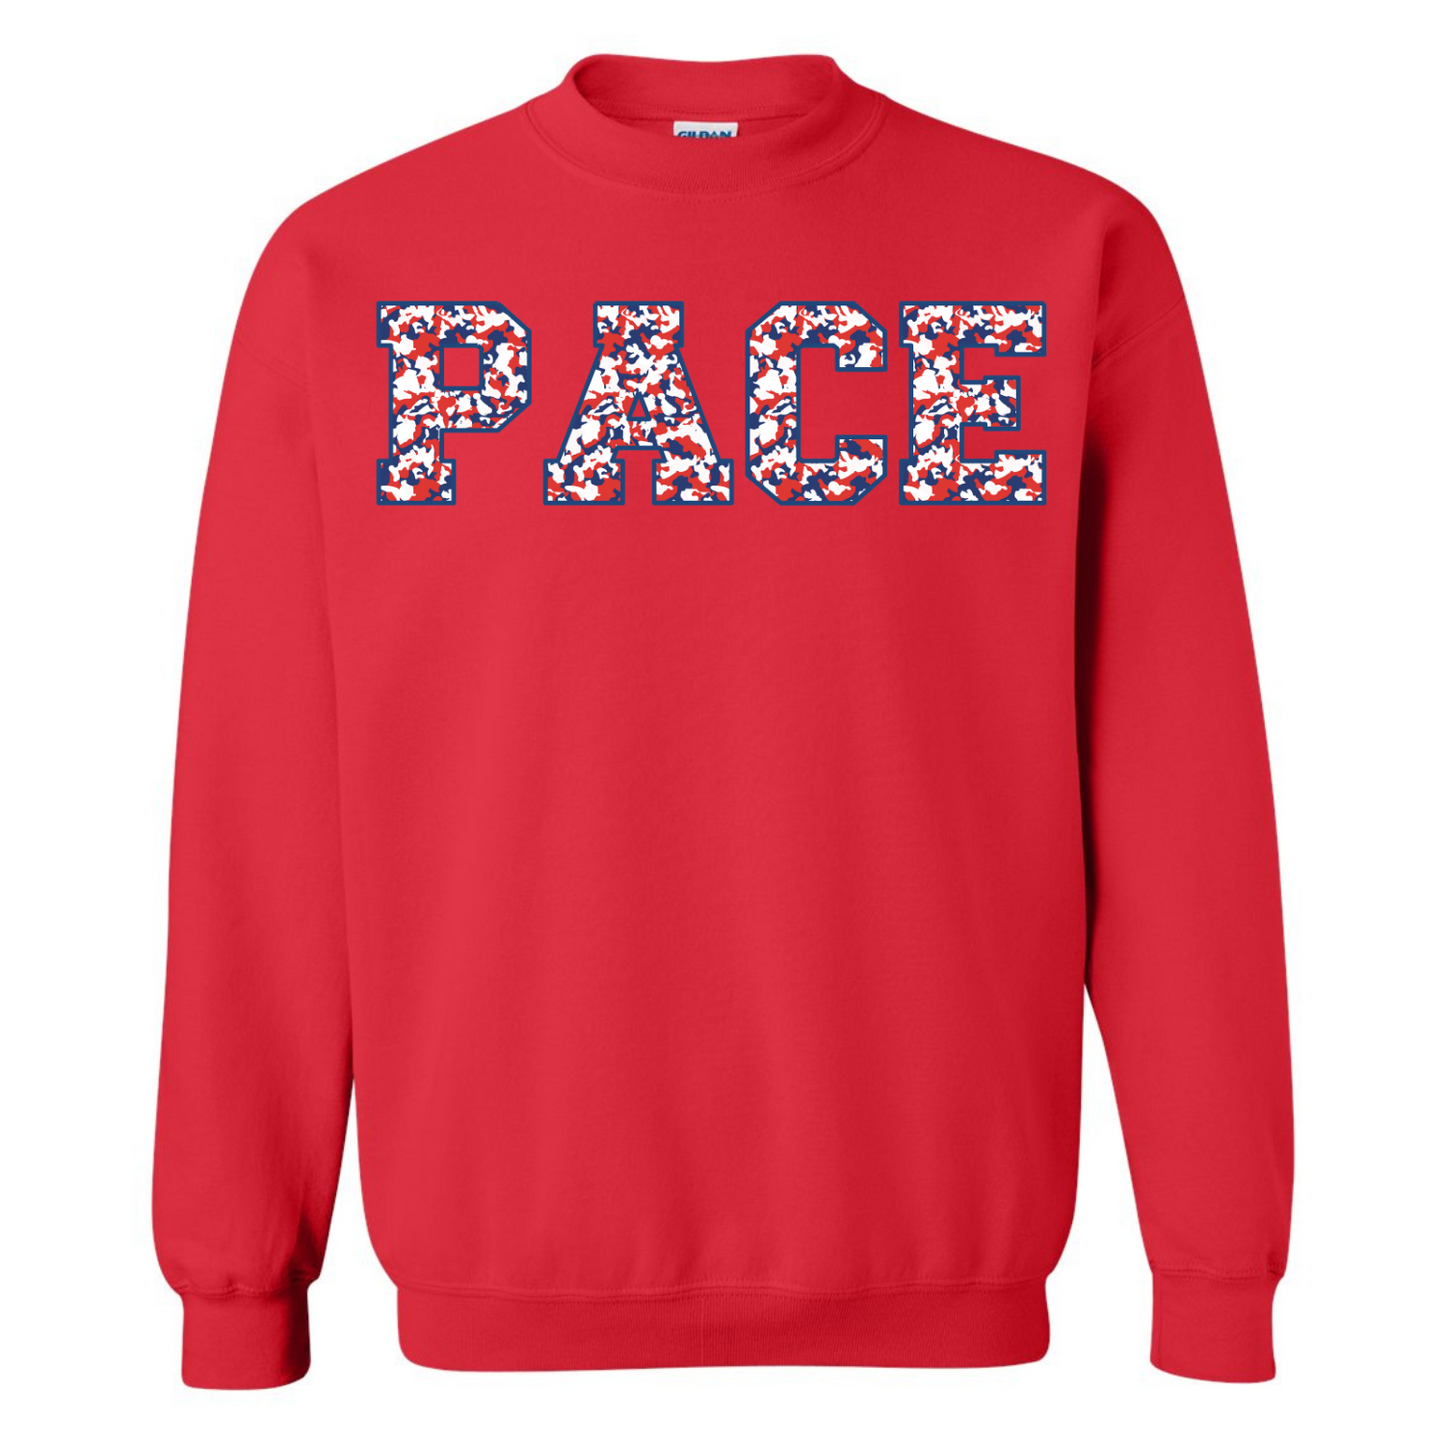 Pace Red + White + Blue Camo Sweatshirt